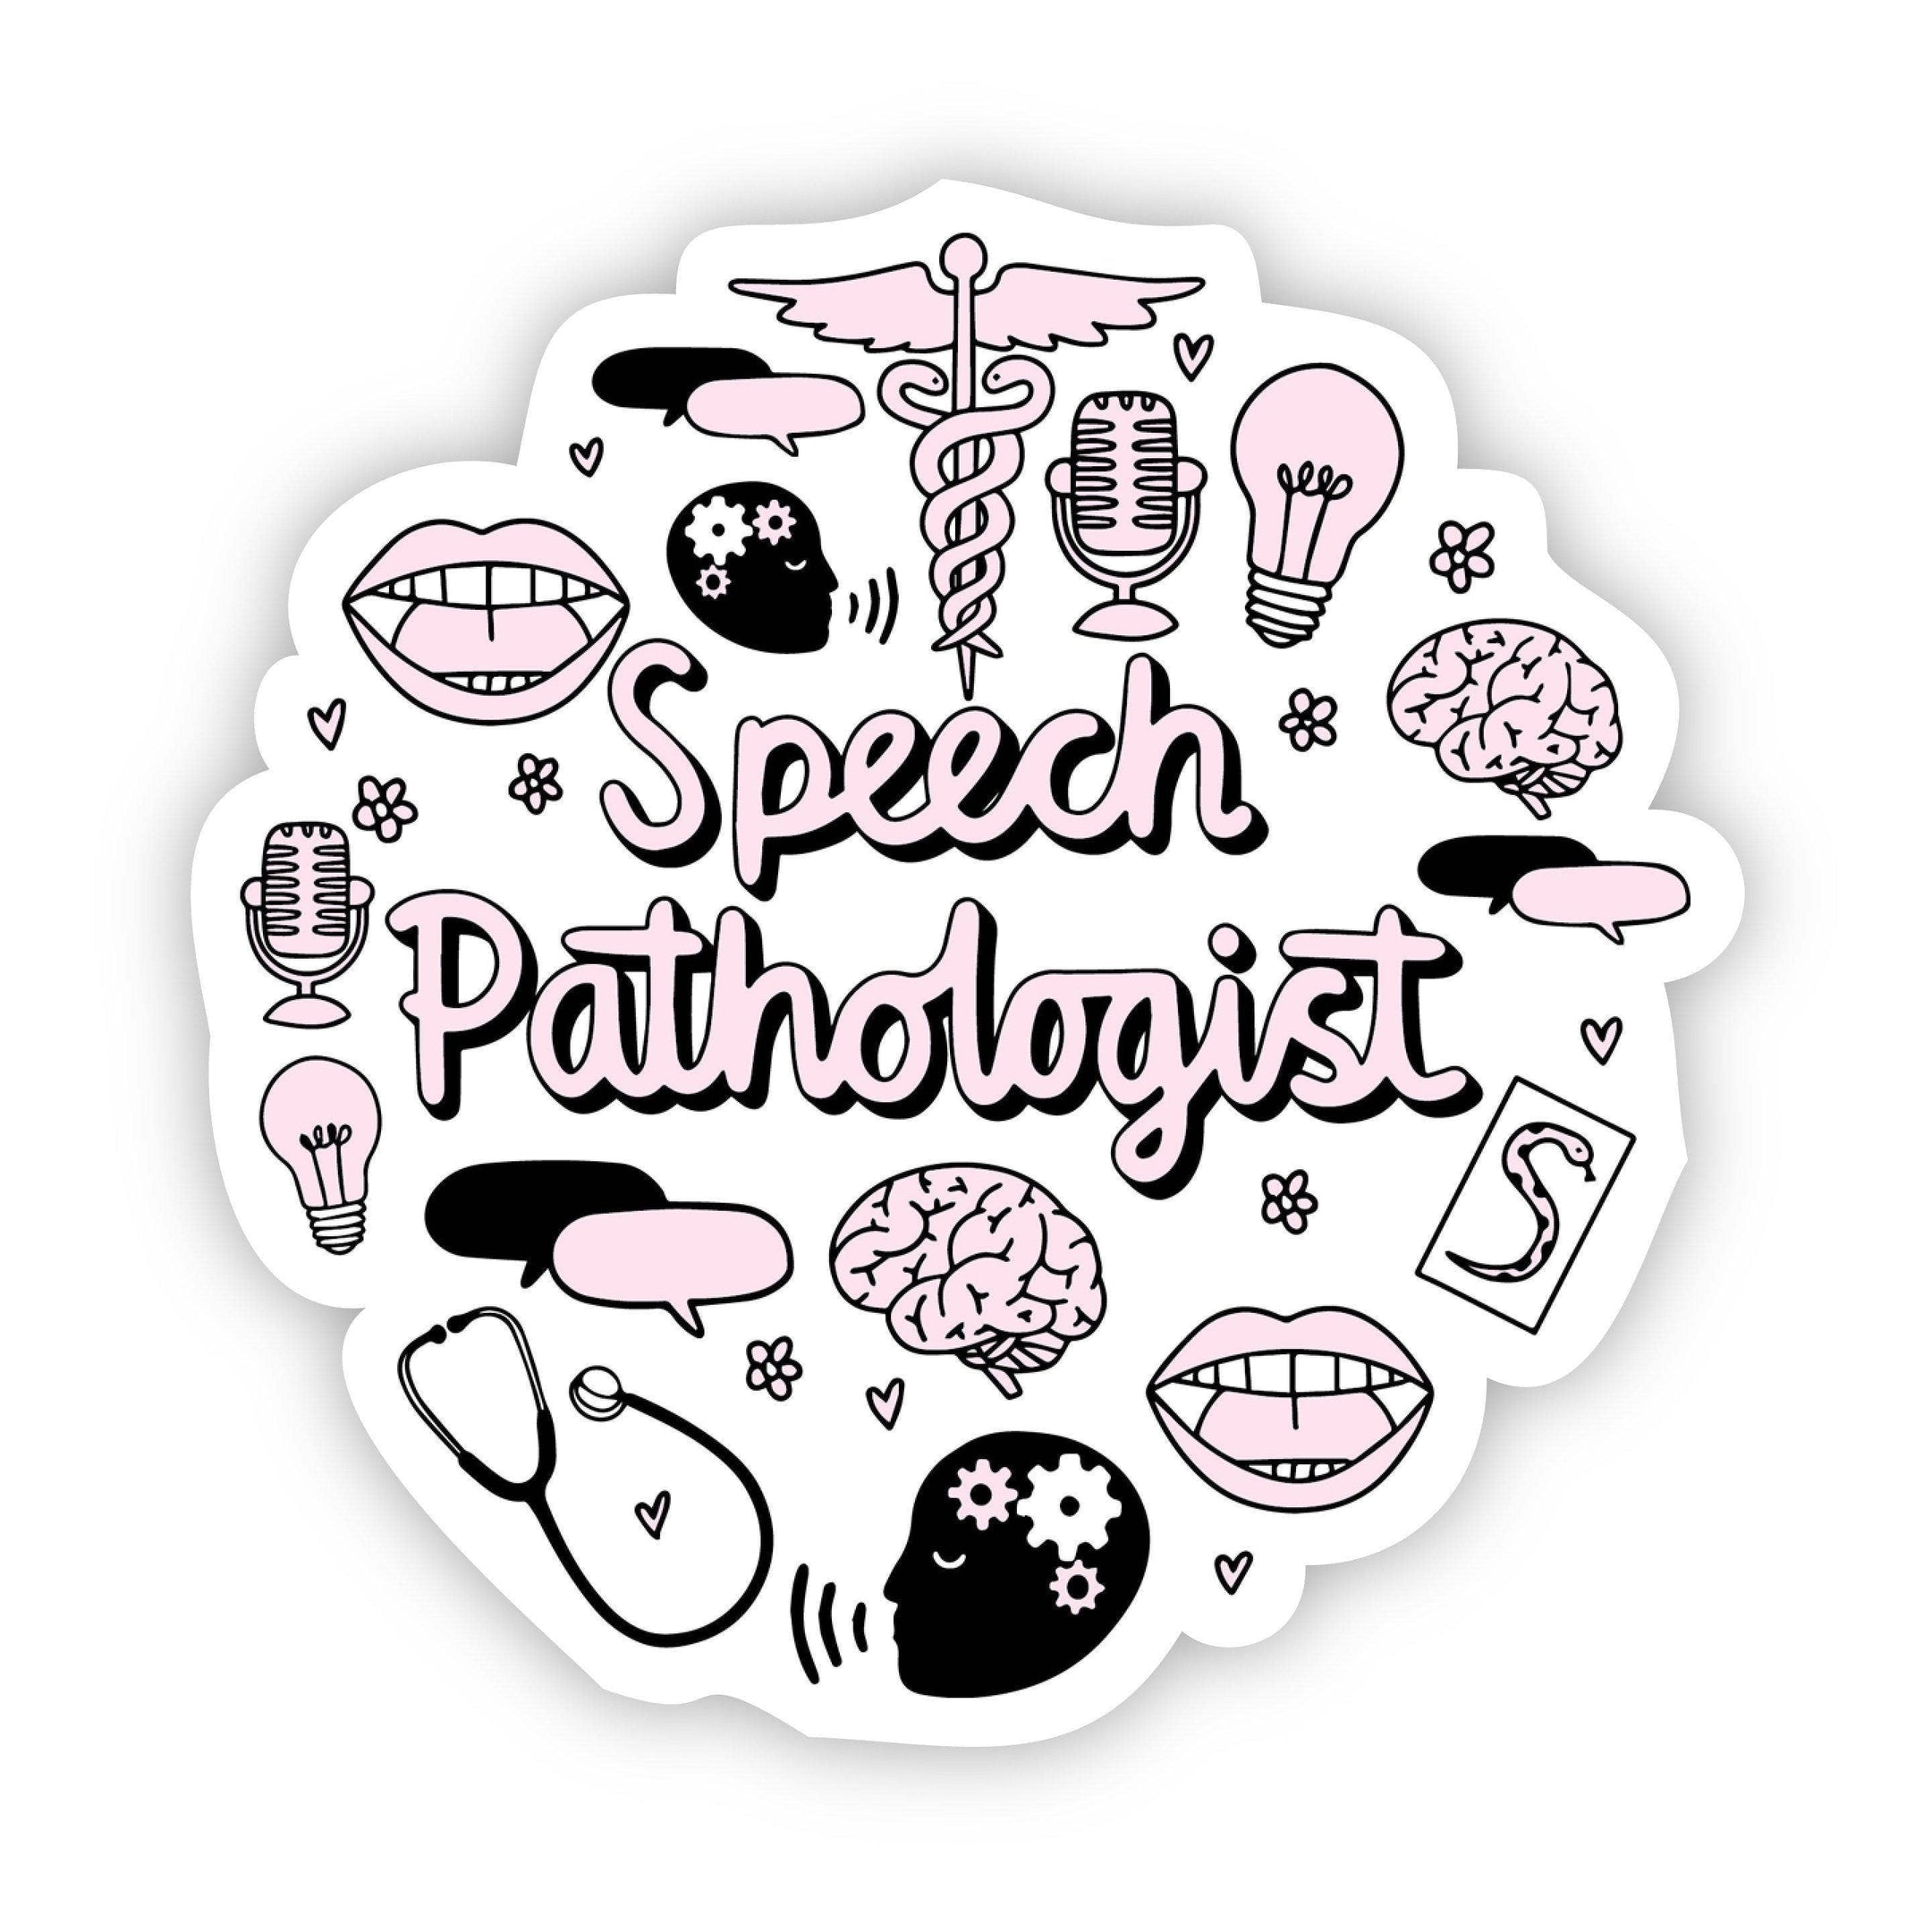 Speech Pathologist.